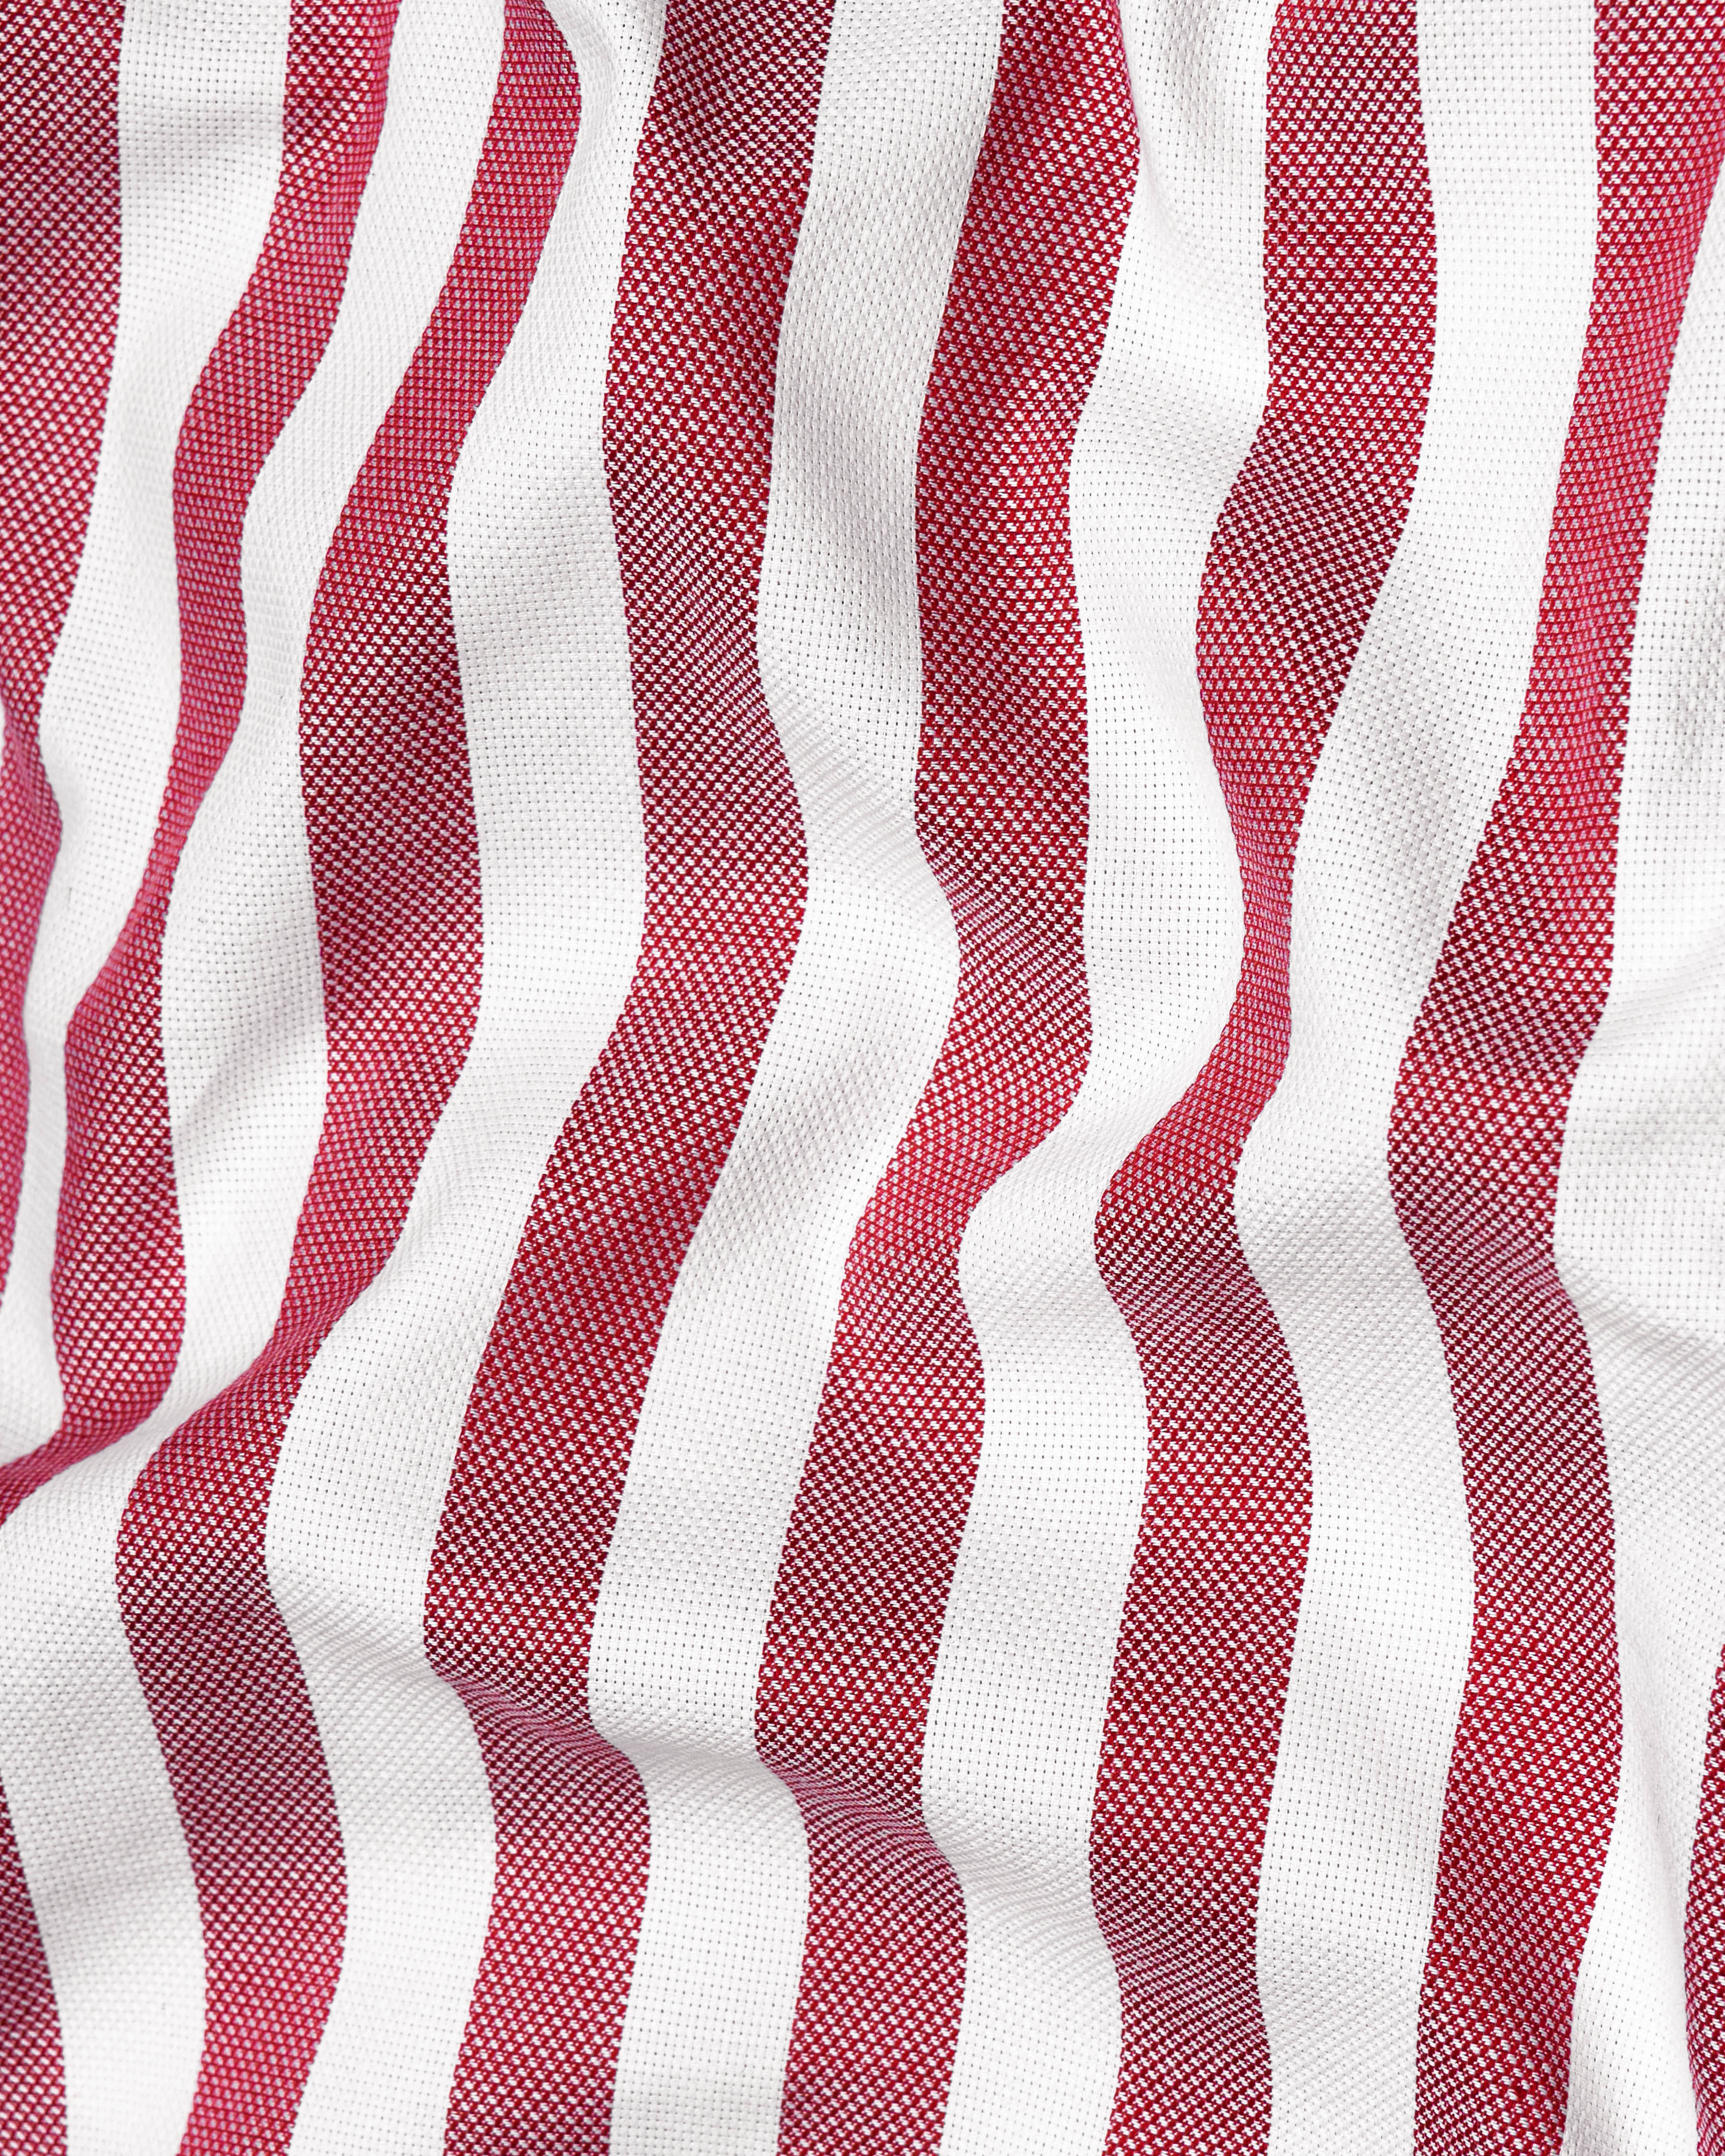 Bright White with Merlot Pink Striped Dobby Textured Premium Giza Cotton Shirt  8786-38,8786-H-38,8786-39,8786-H-39,8786-40,8786-H-40,8786-42,8786-H-42,8786-44,8786-H-44,8786-46,8786-H-46,8786-48,8786-H-48,8786-50,8786-H-50,8786-52,8786-H-52